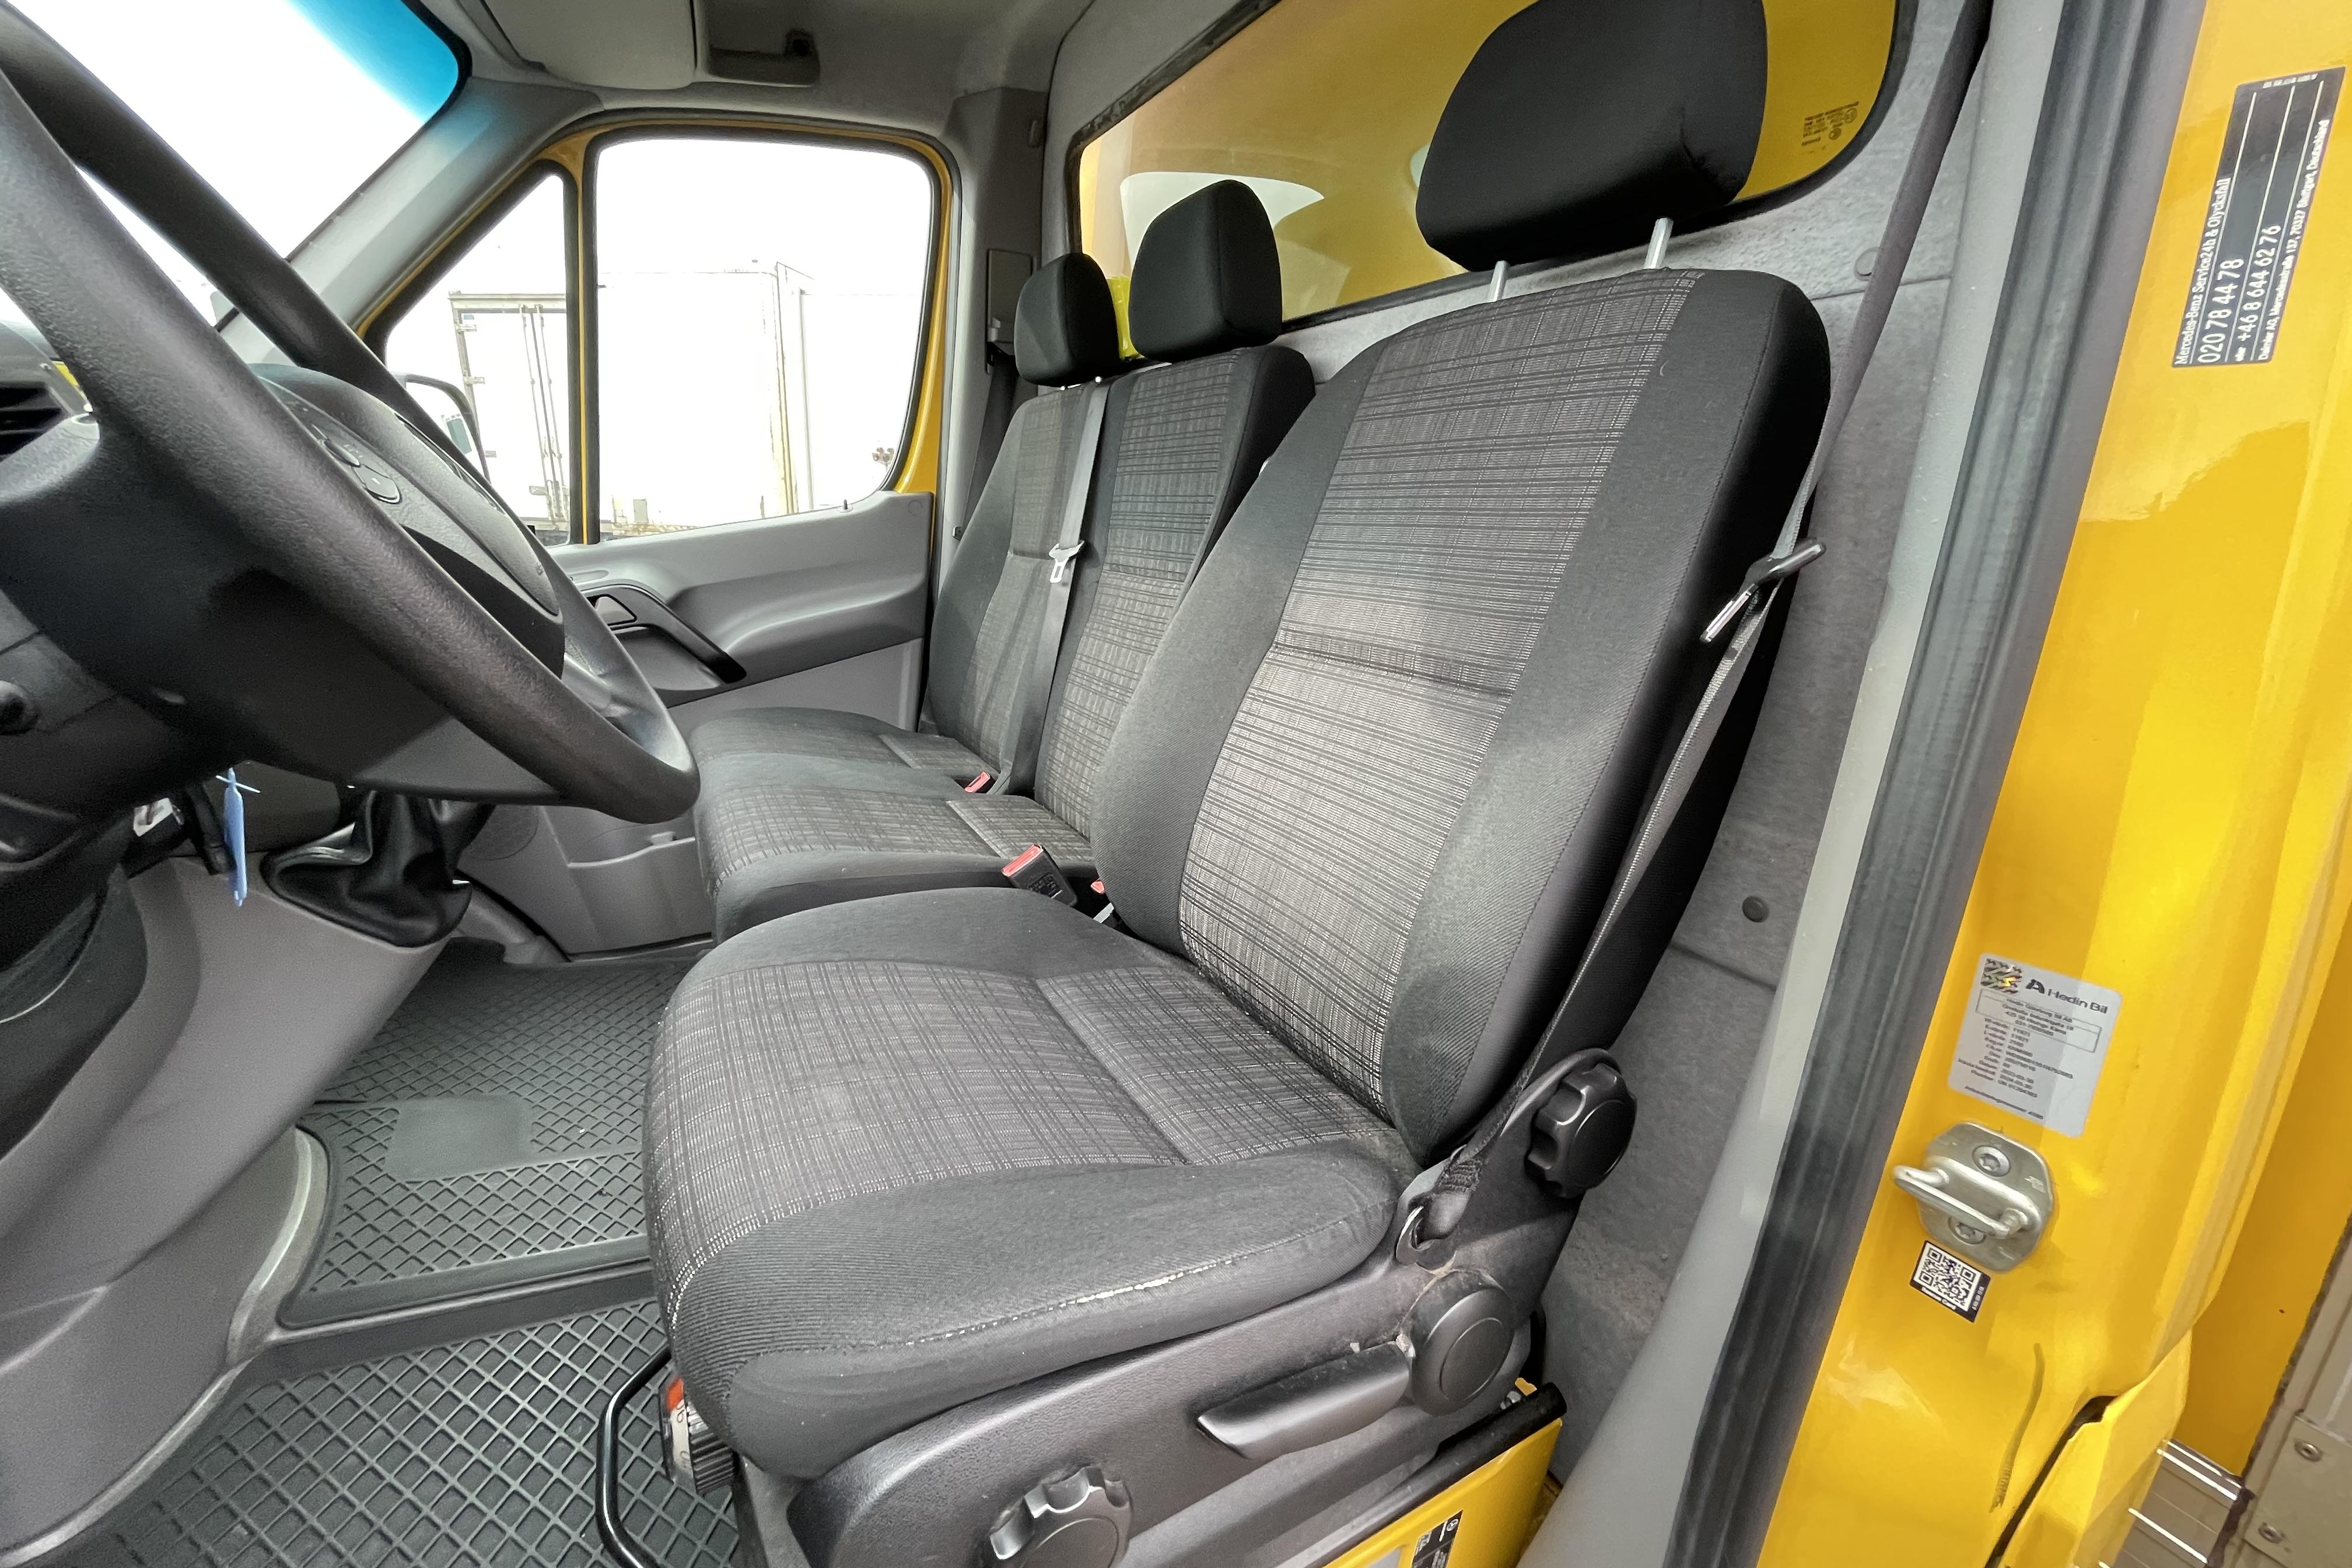 Mercedes Sprinter 516 CDI (163hk) - 155 295 km - Manual - yellow - 2018